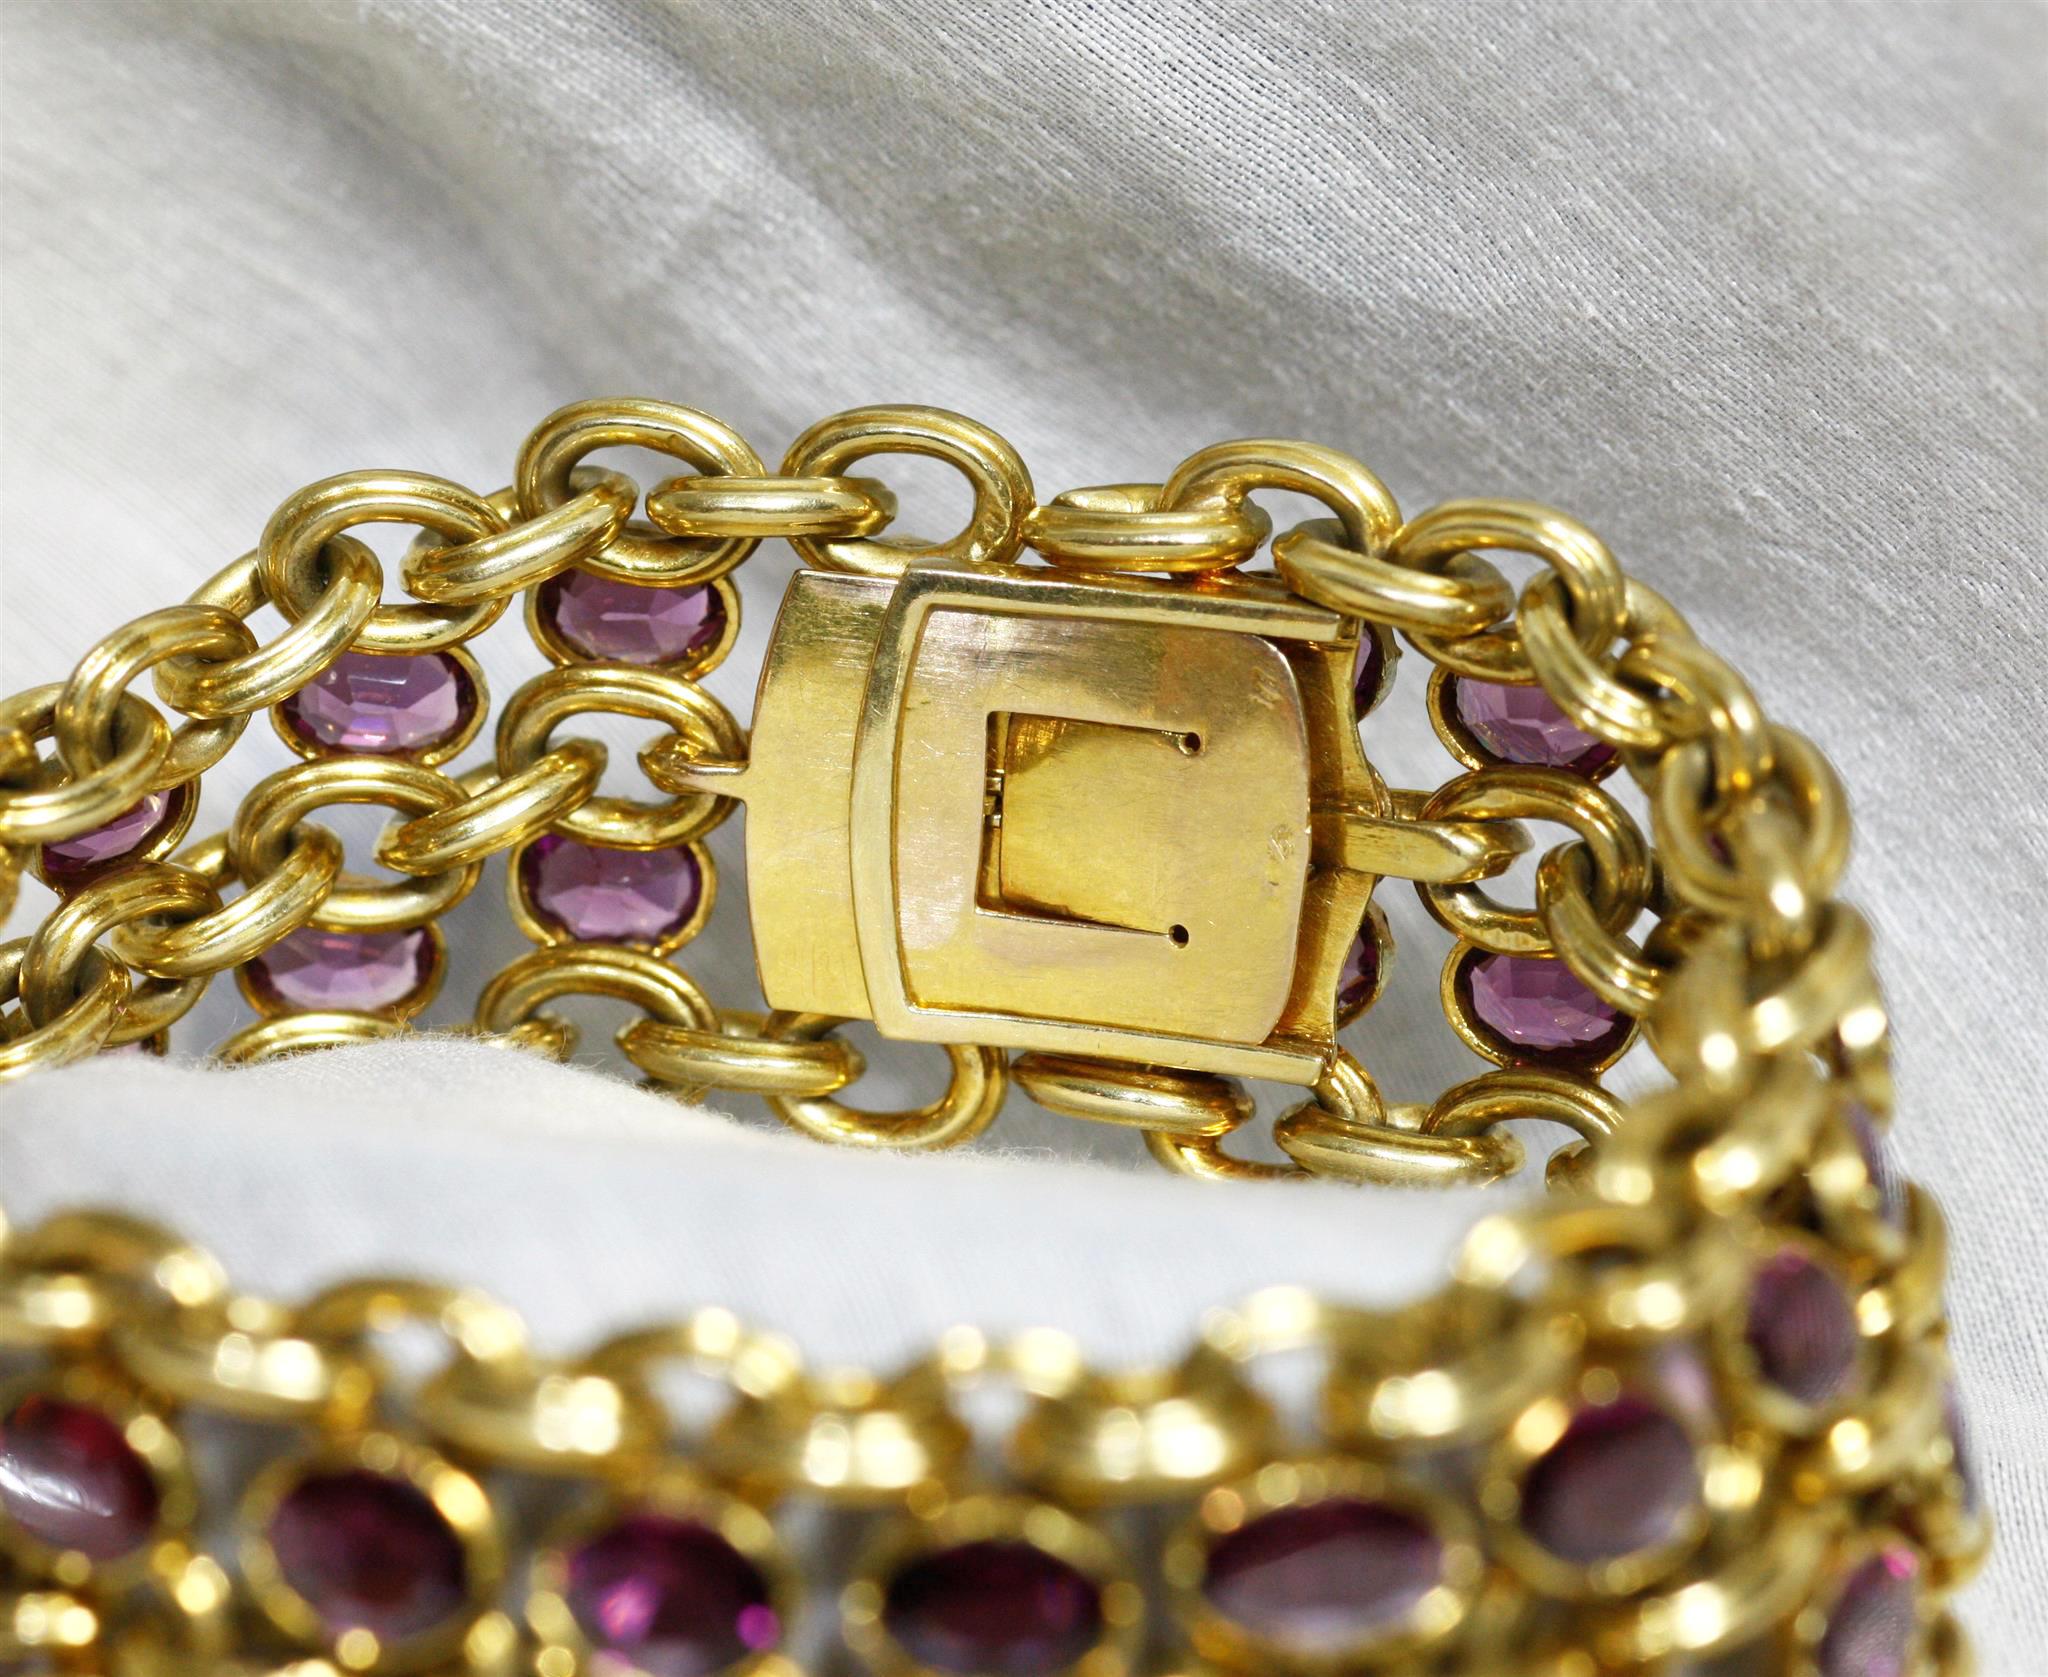 Napoleon III Antique French 19th Century 18 Karat Gold and Garnets Bracelet